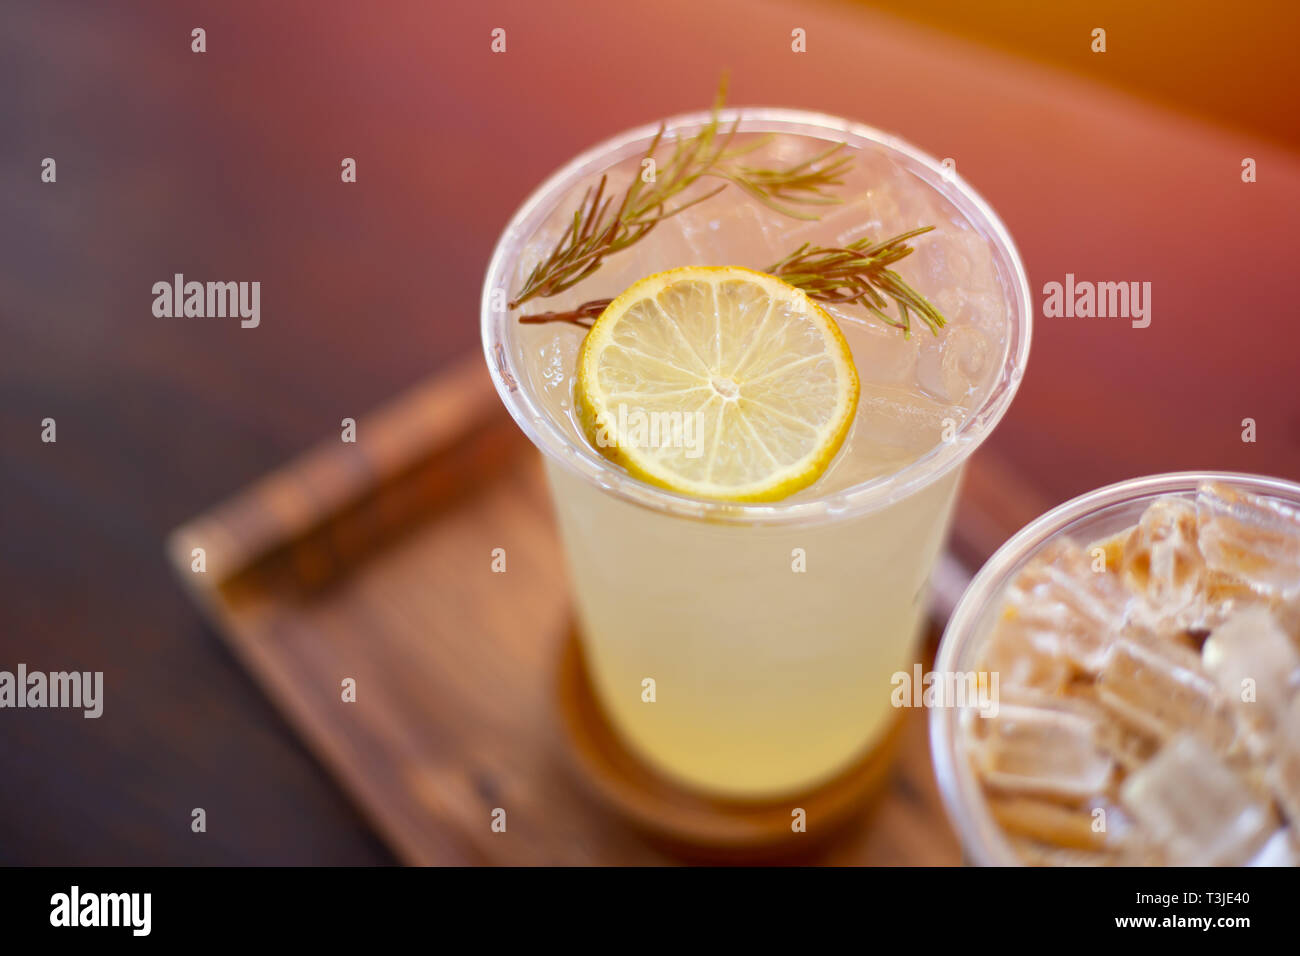 ice lemon soda juice on wooden table. fresh fruite drink for hot summer season. Stock Photo